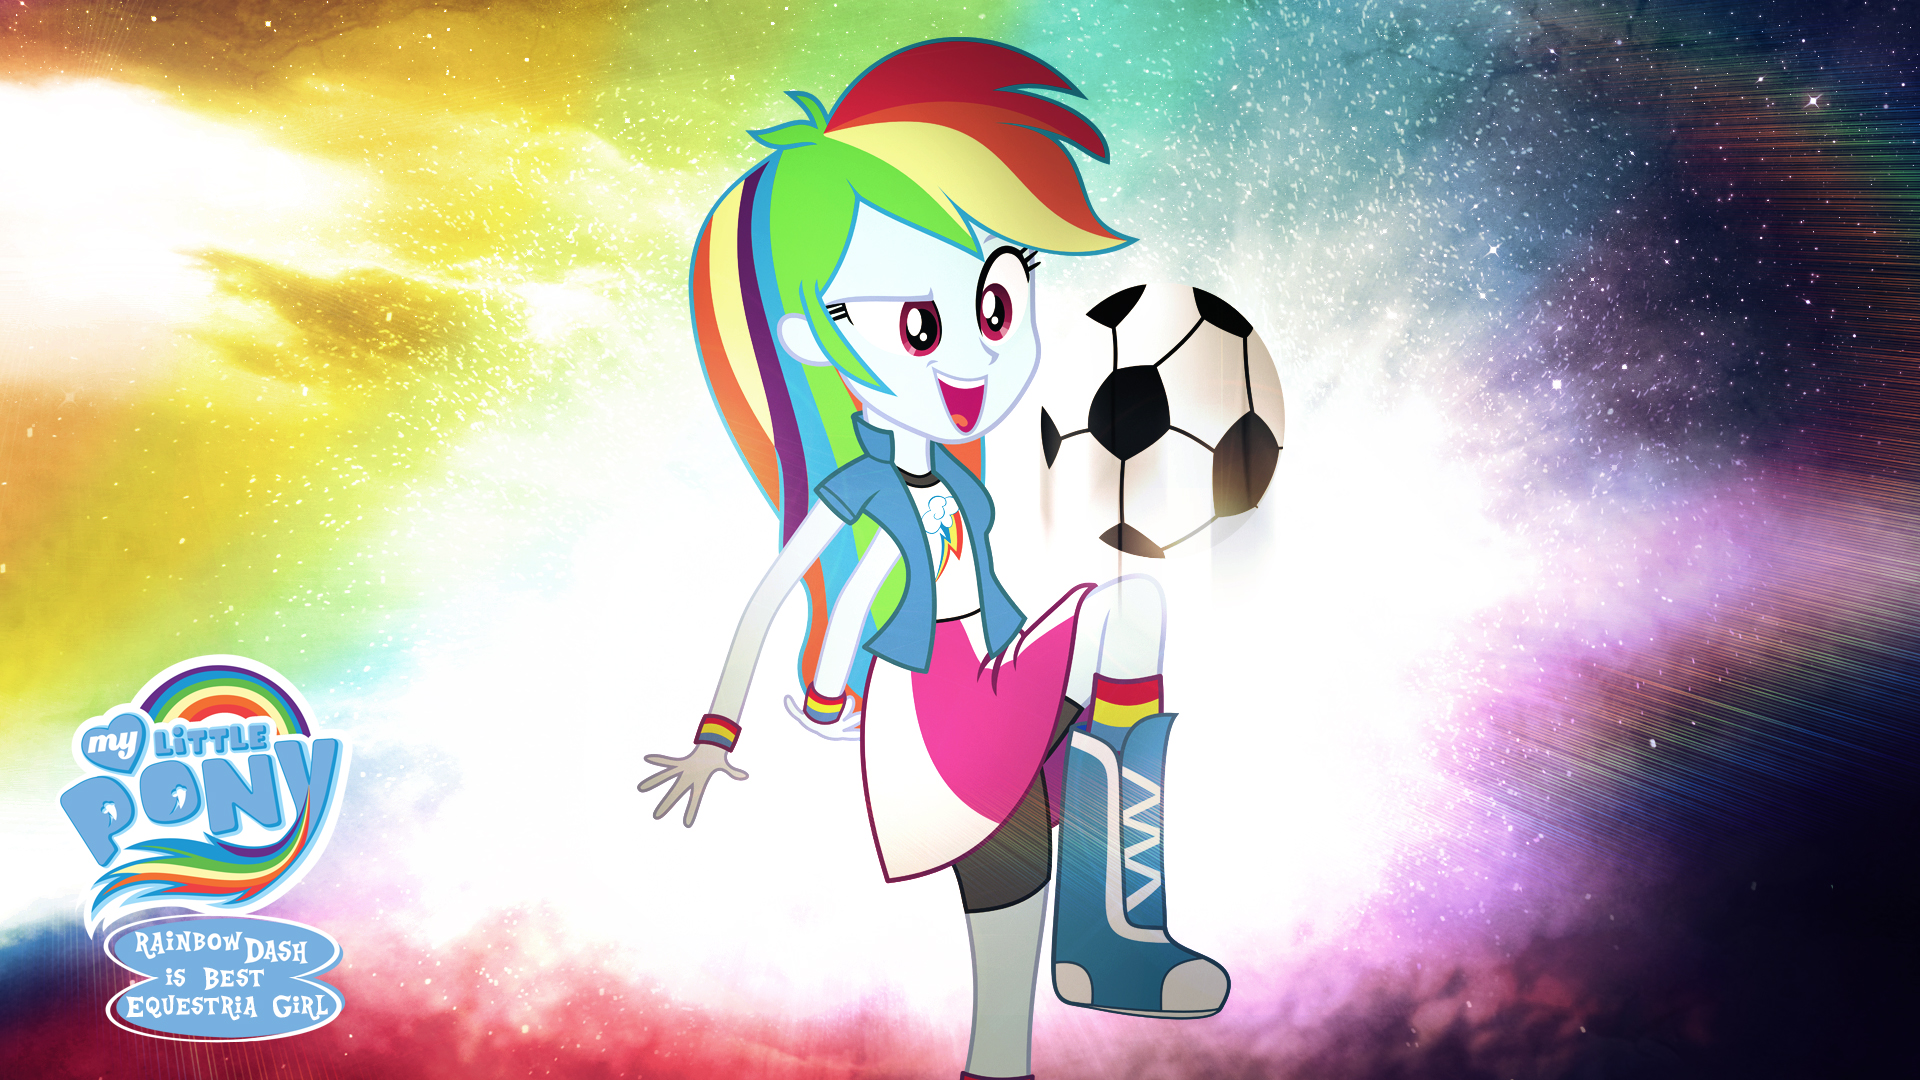 Rainbow Dash Is Best Equestria Girl HD Wallpaper By Jackardy On